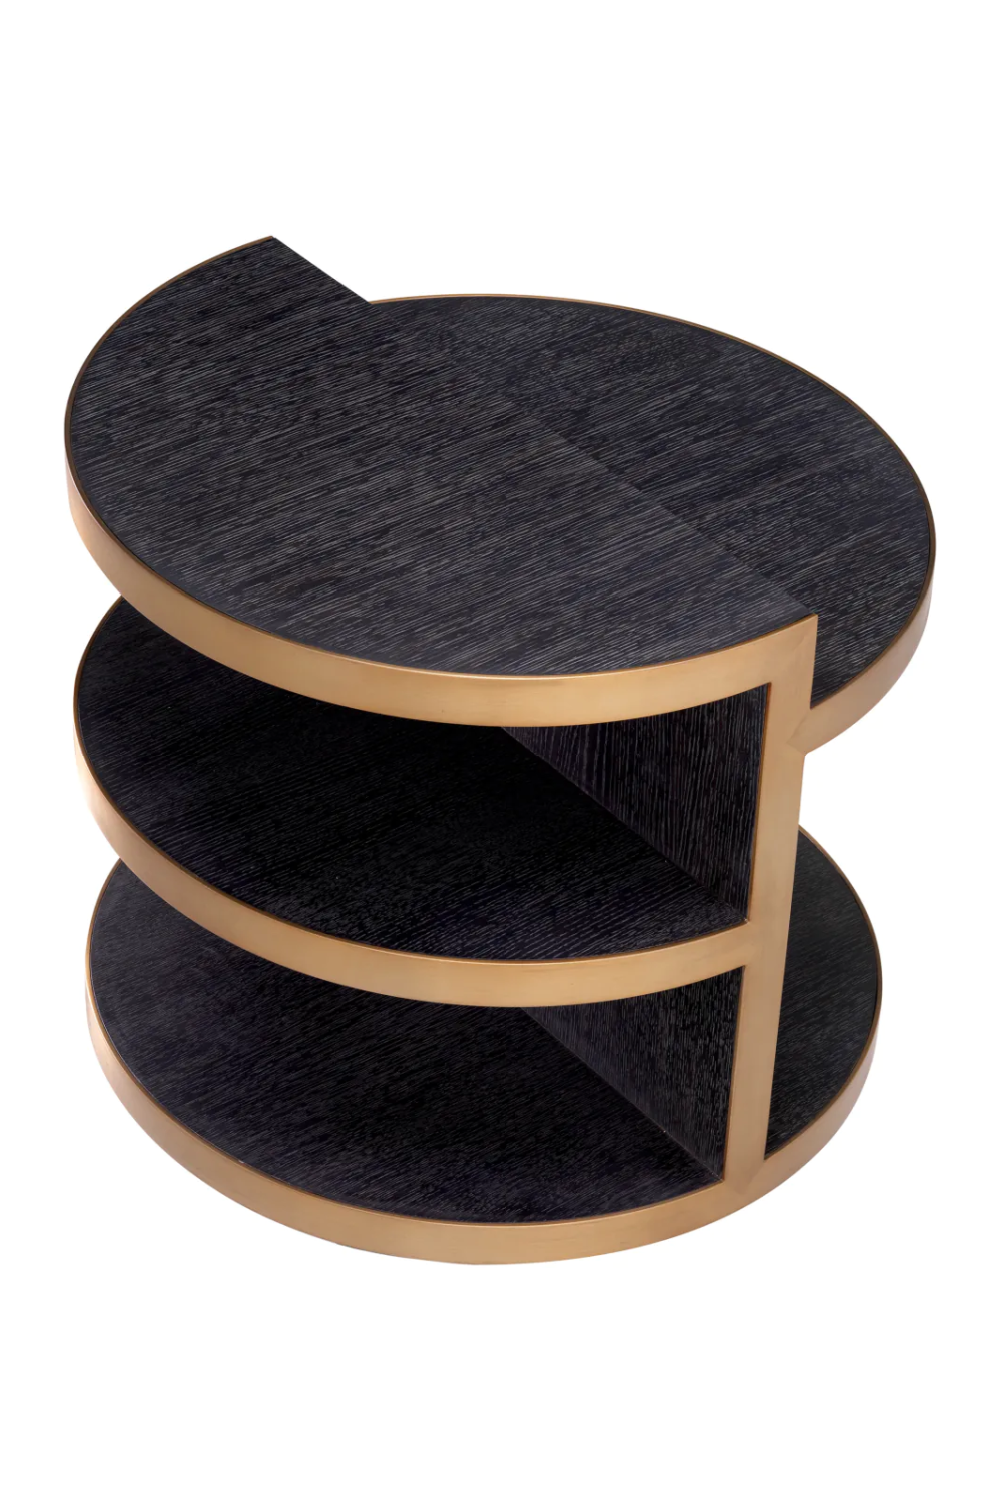 Black Oak Modern Side Table | Eichholtz Nilo | Oroa.com